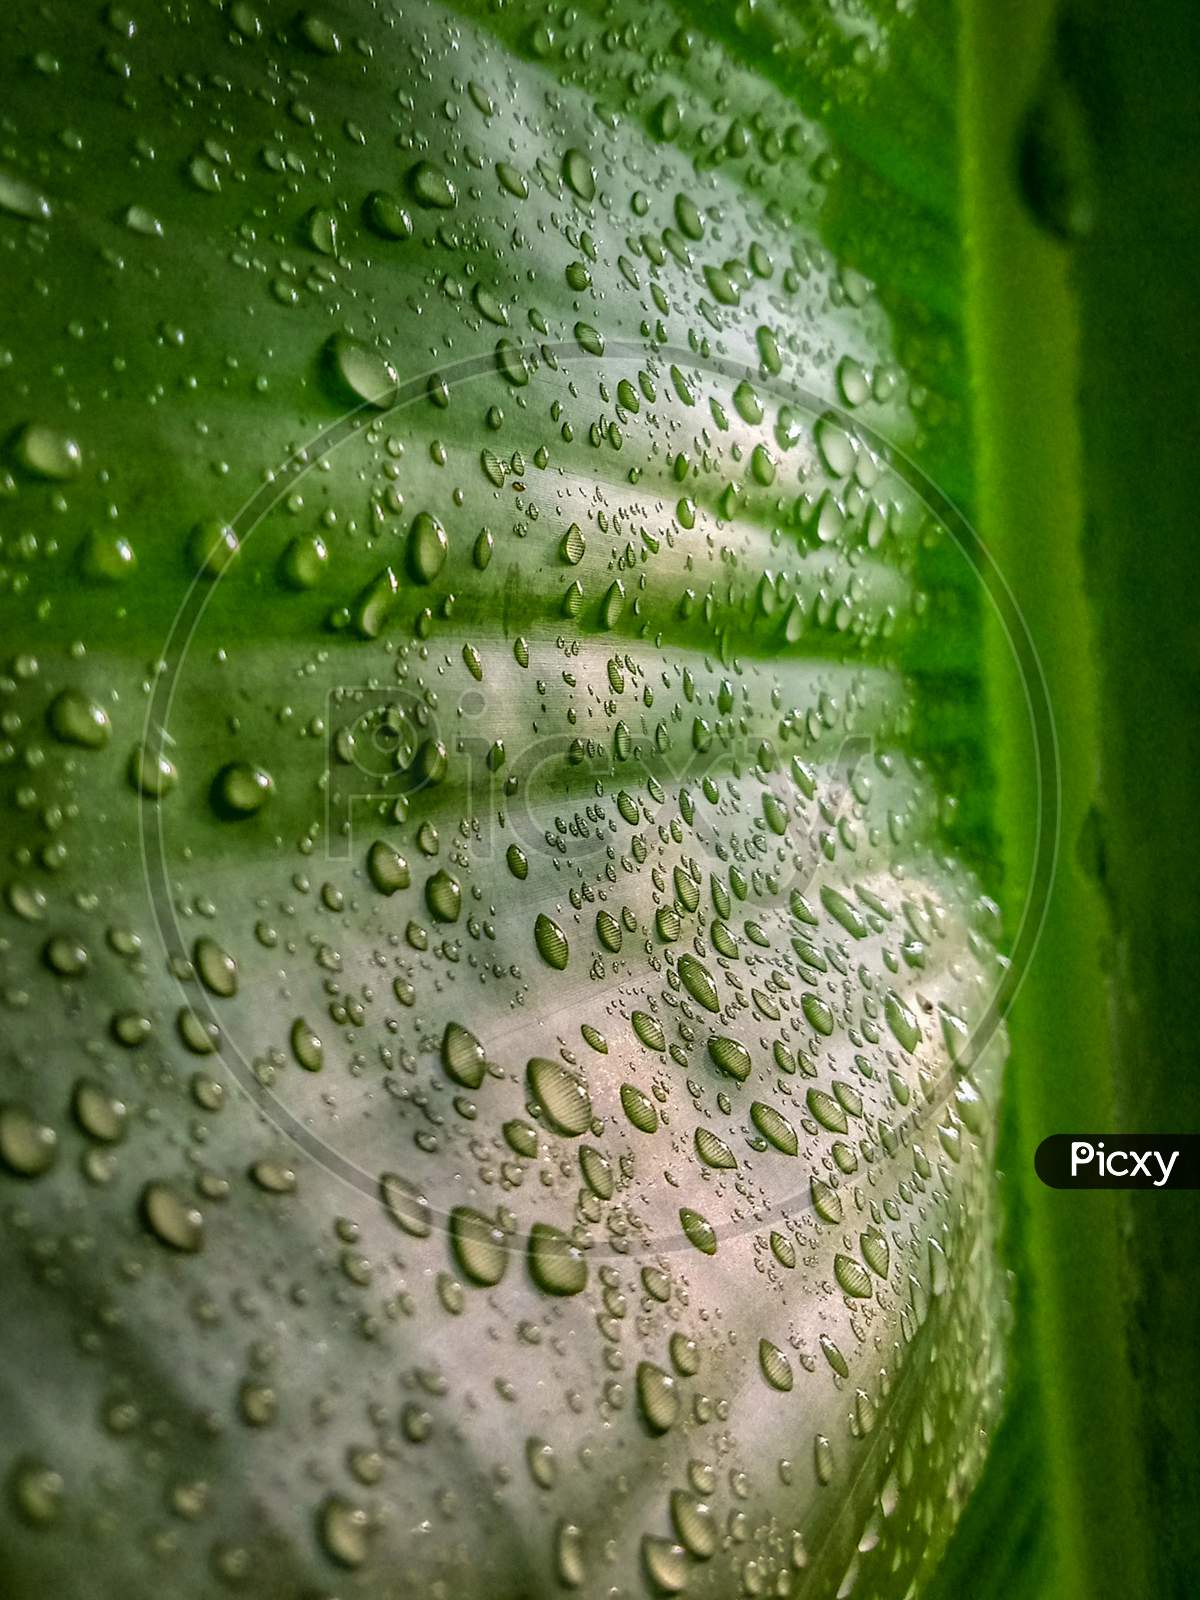 Dewdrops on banana leaf.